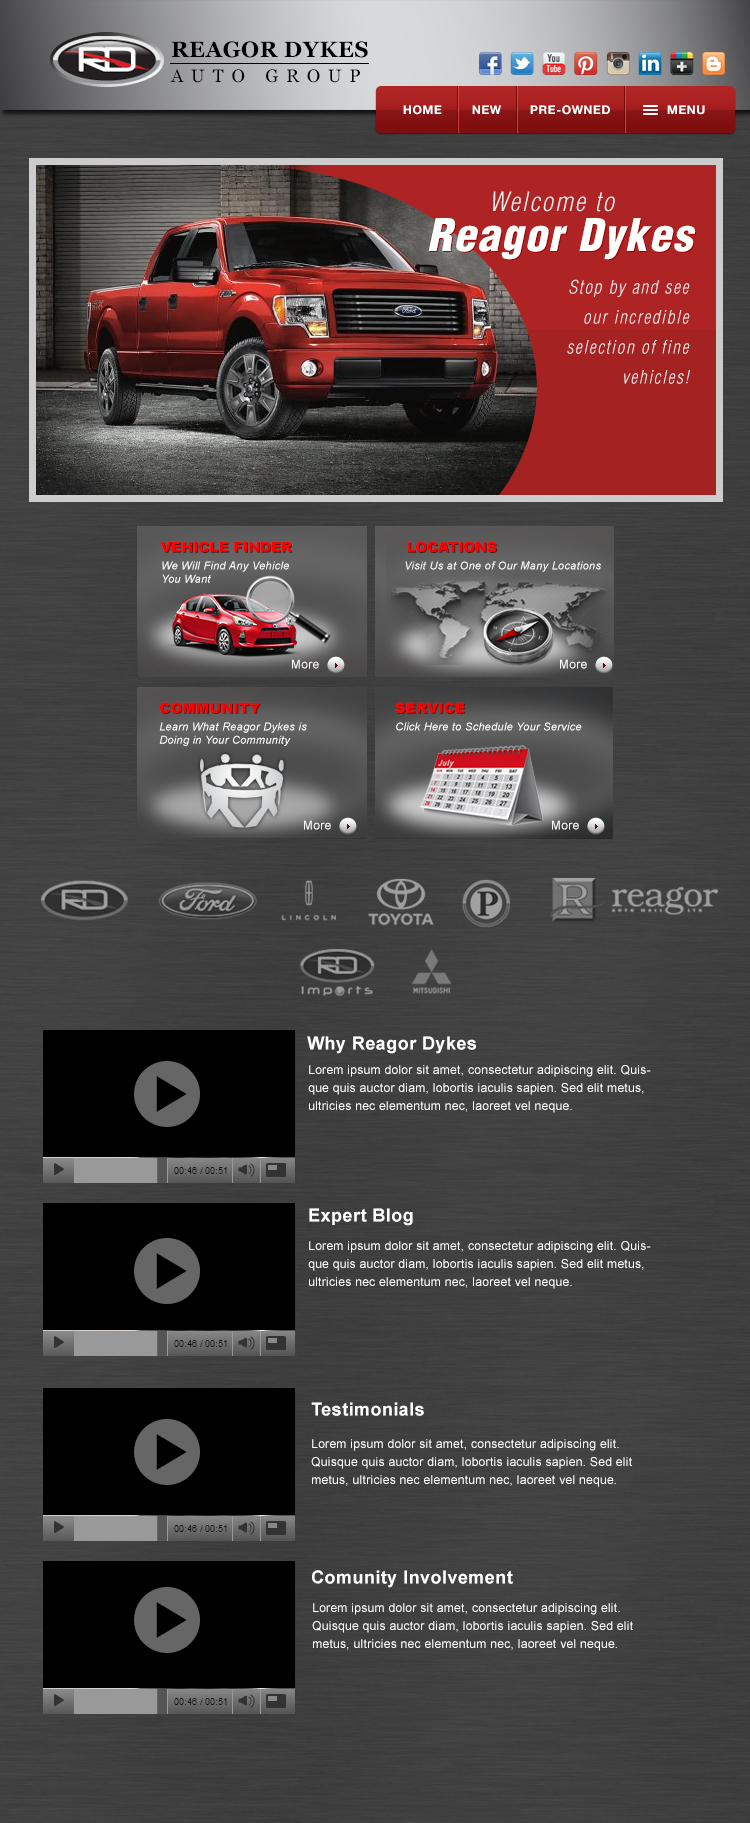 Studio-RM Portfolio - Responsive Website Design